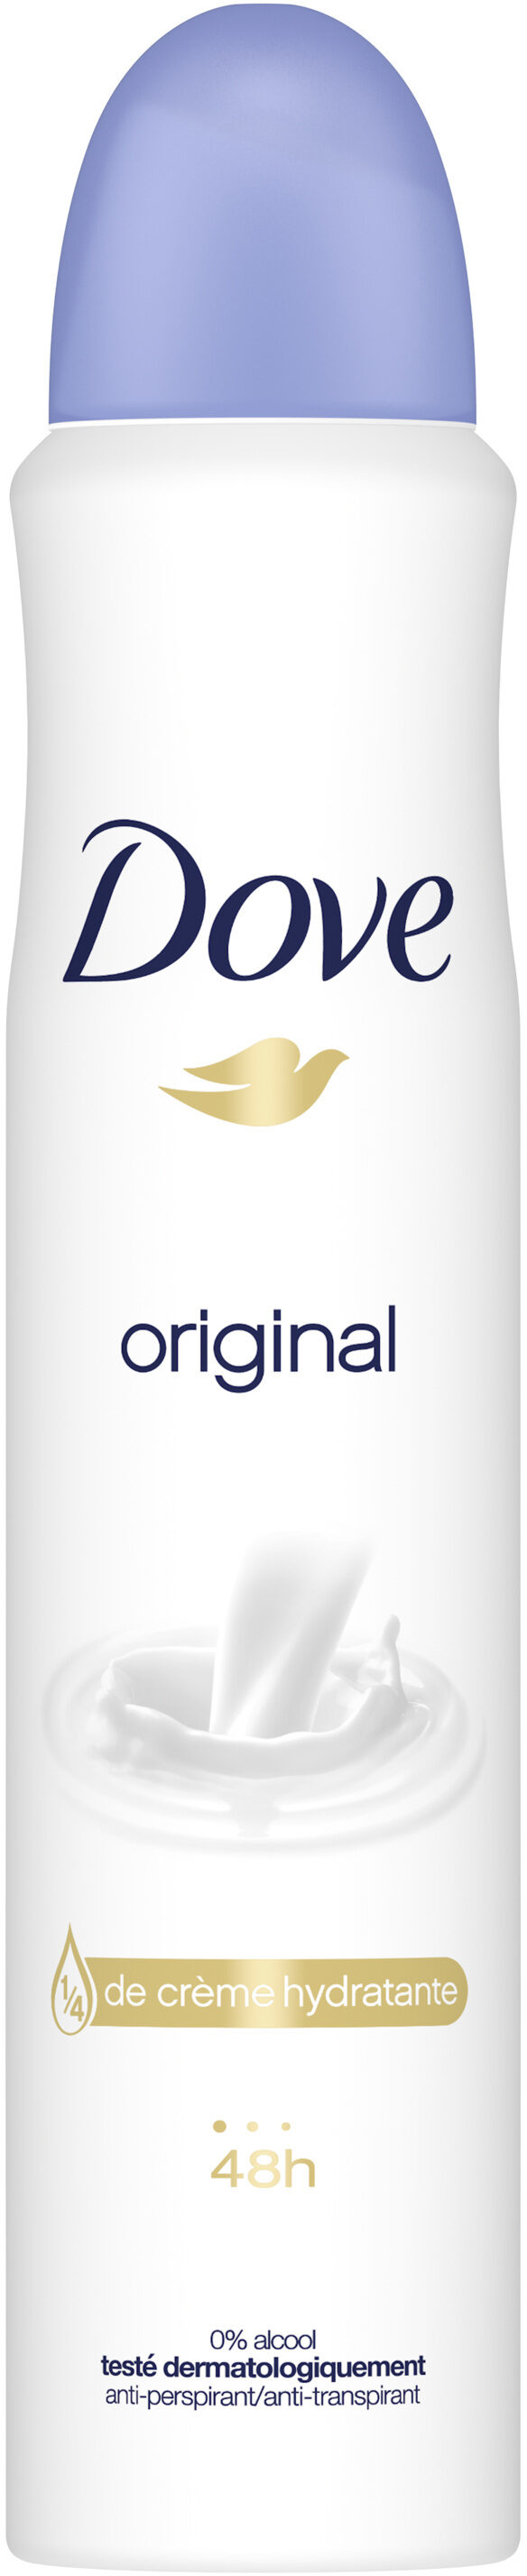 Dove original 200ml - Product - fr